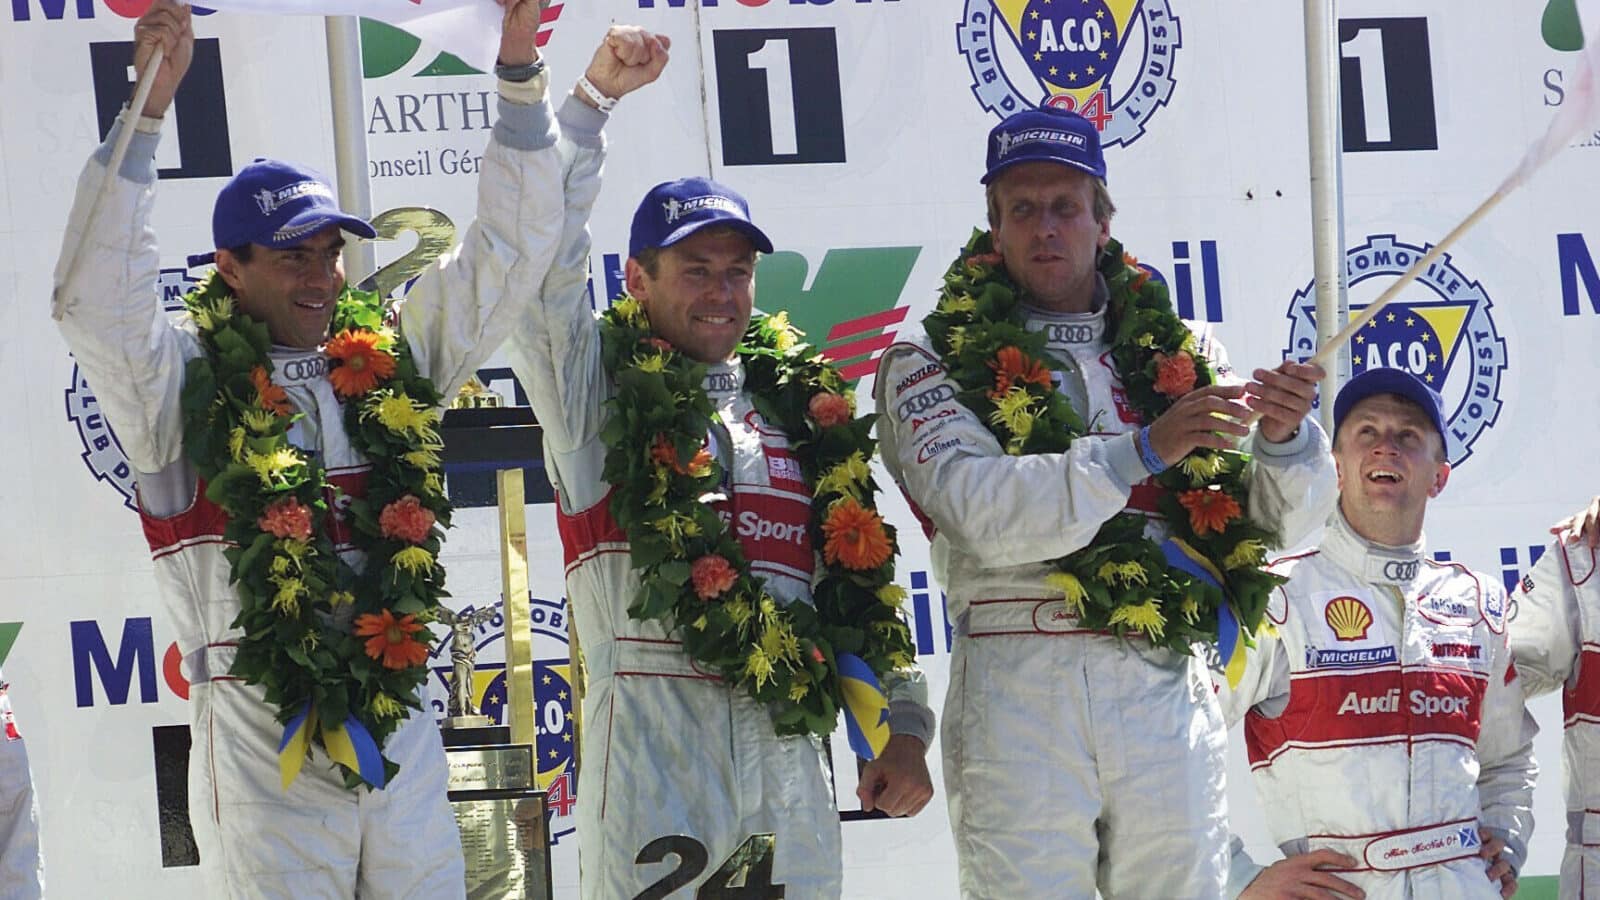 Audi Le Mans R8 podium